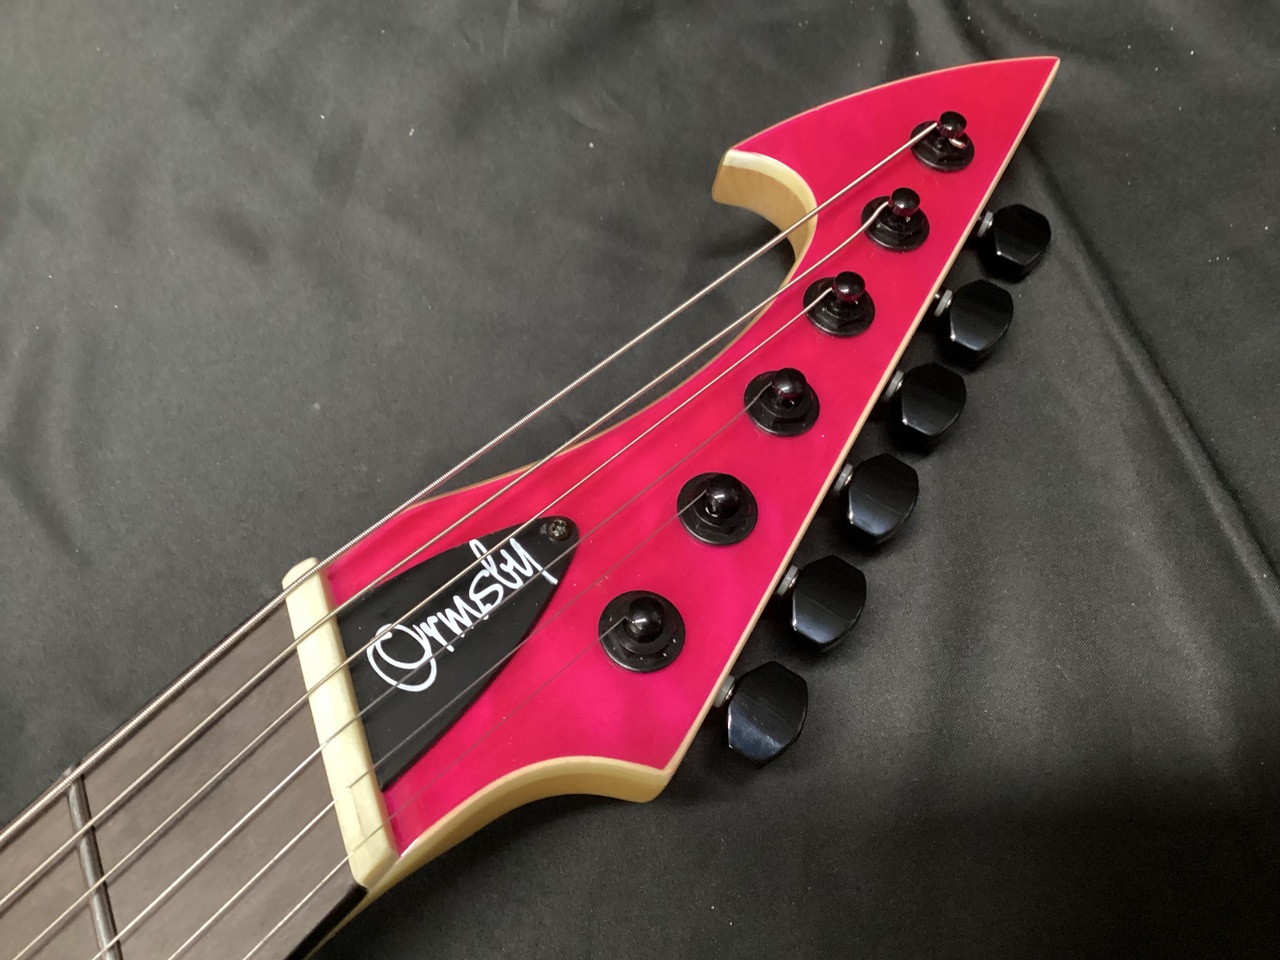 Ormsby Guitars HYPE GTR6 MSMP QUILT MAPLE Dragon Burst B級特価 